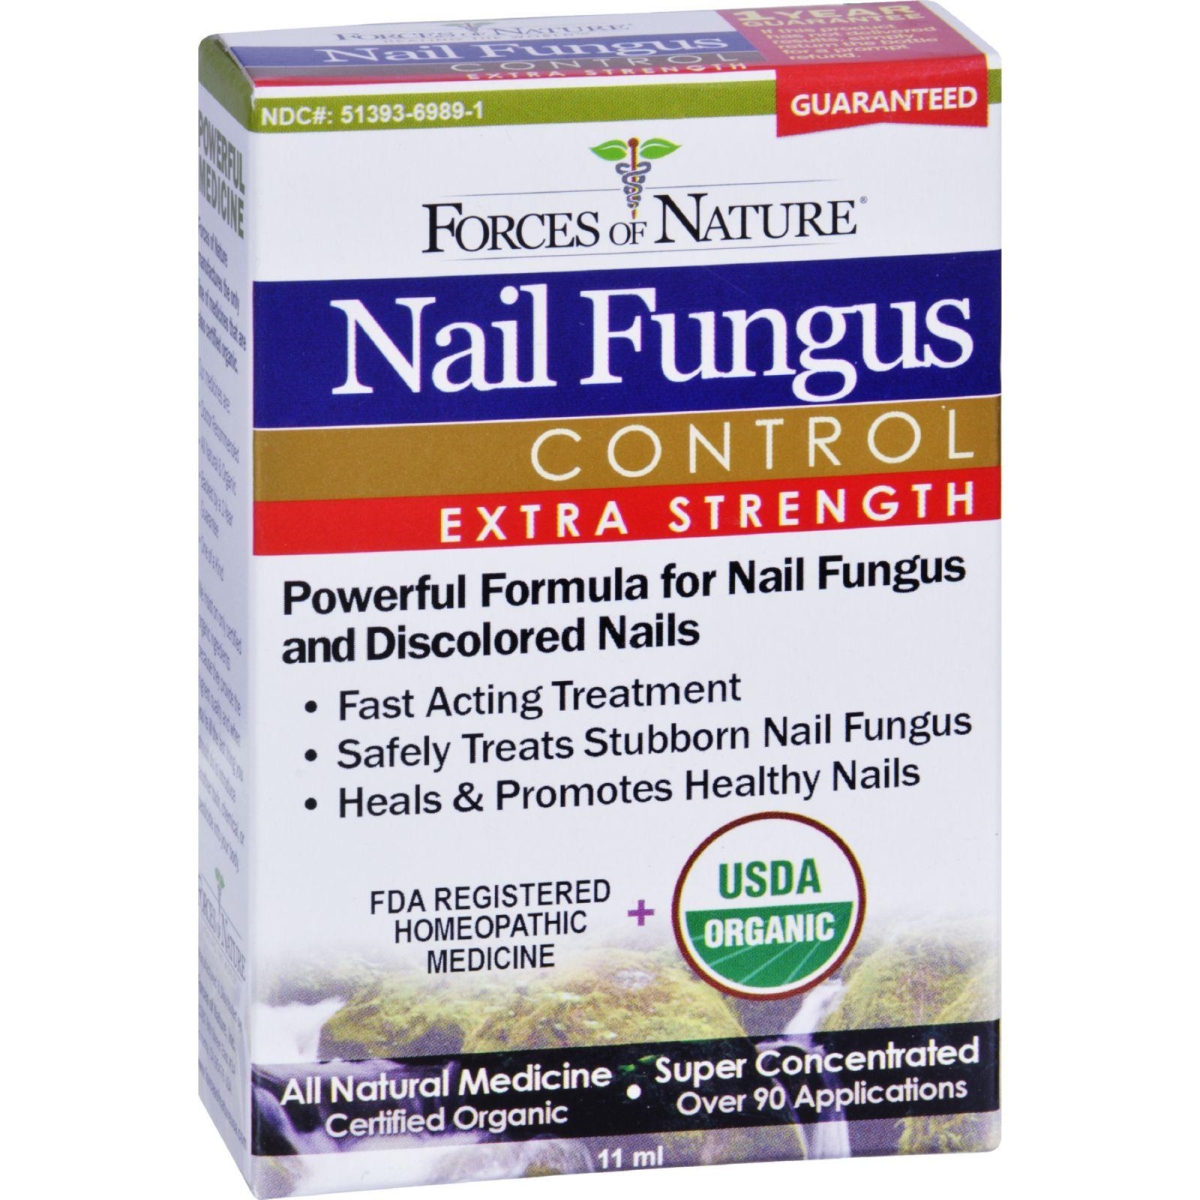 Hg1025352 11 Ml Organic Nail Fungus Control, Extra Strength